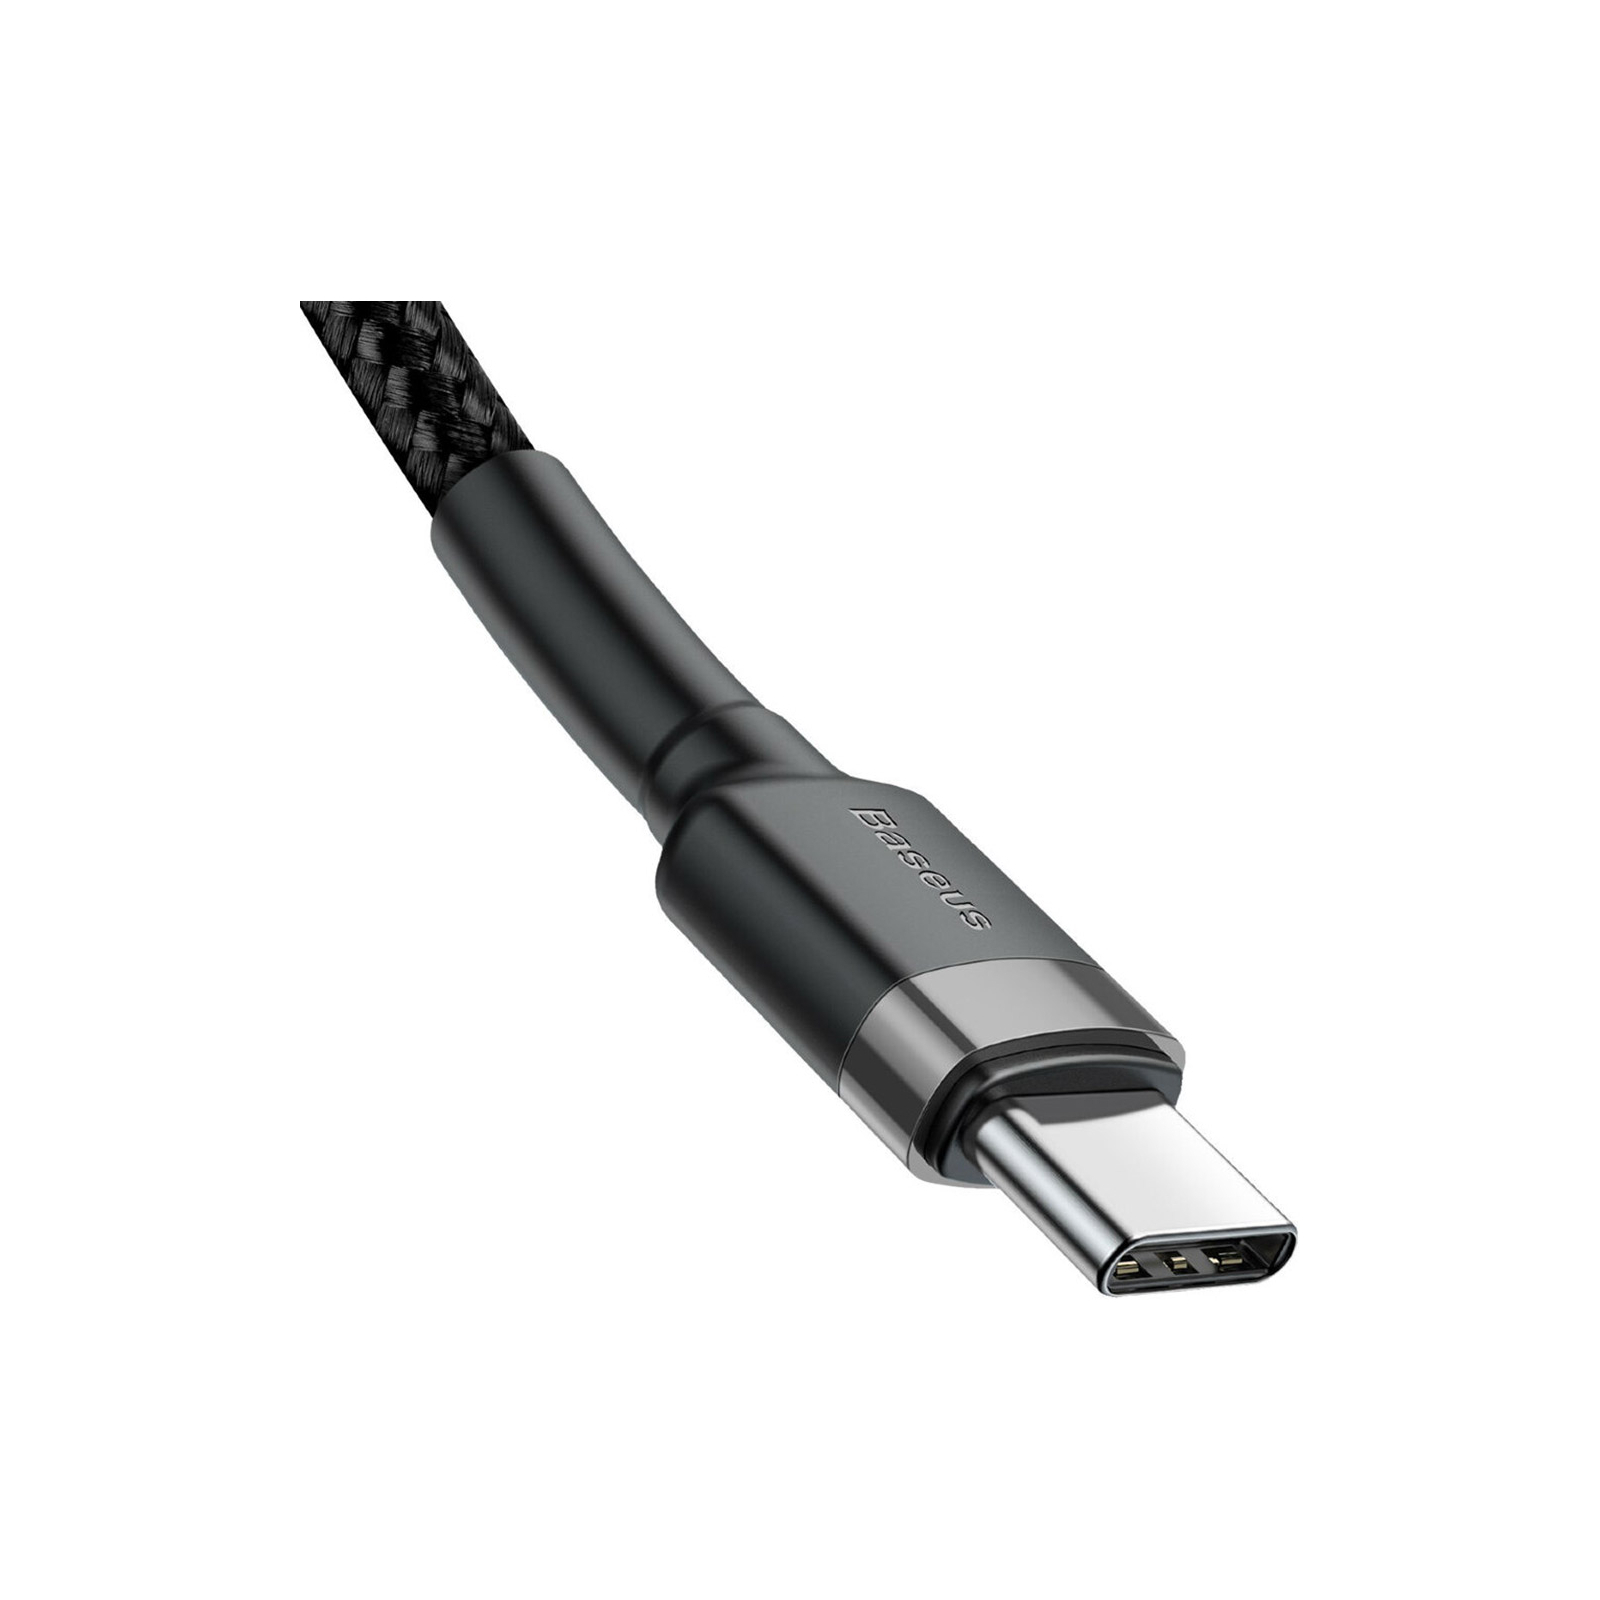 Дата кабель USB-C to USB-C 1.0m 3A 60W Cafule Black Baseus (CATKLF-GG1) зображення 3